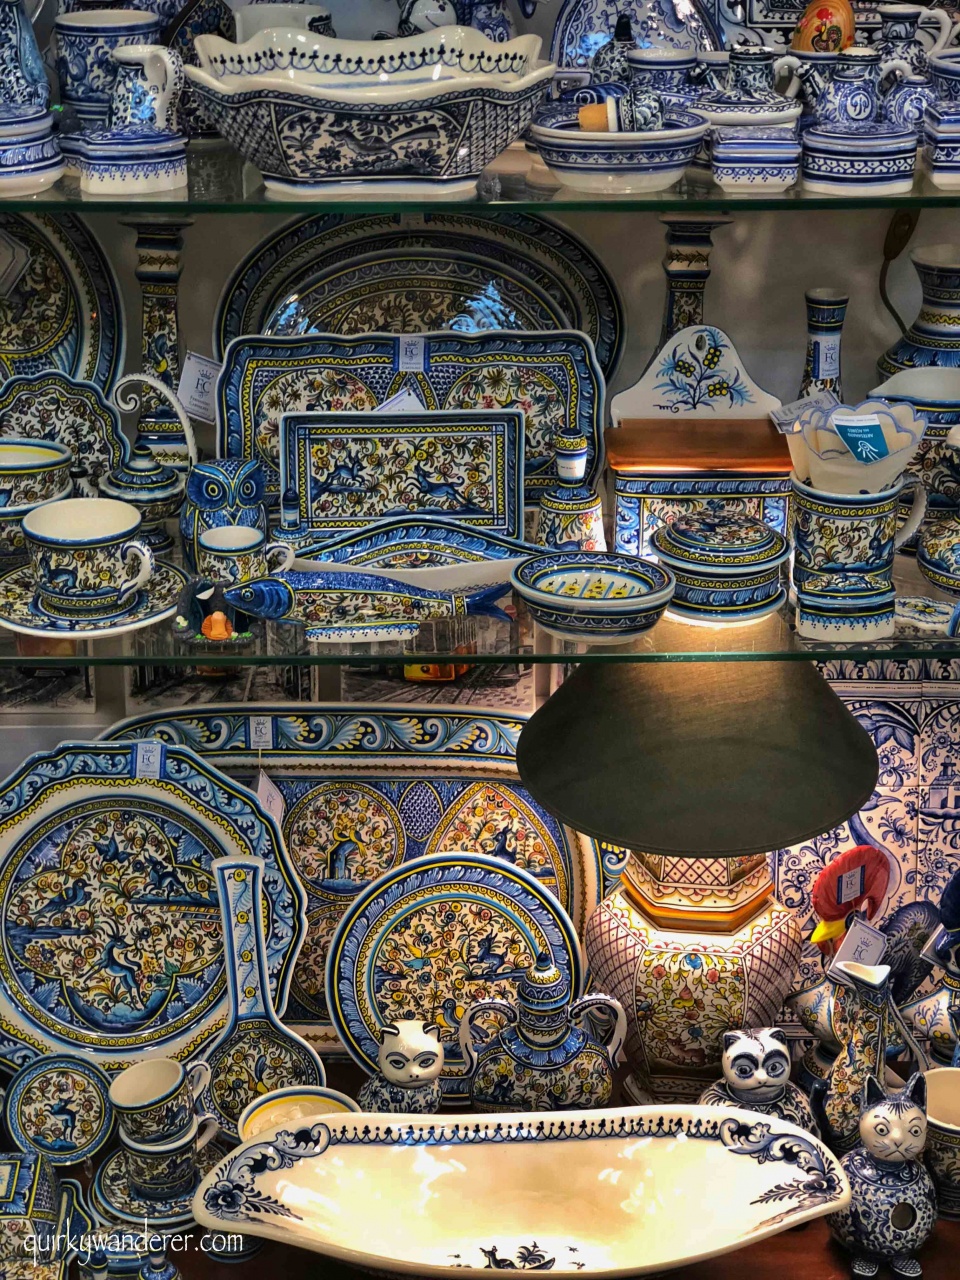 shopping in portugal : ceramic items